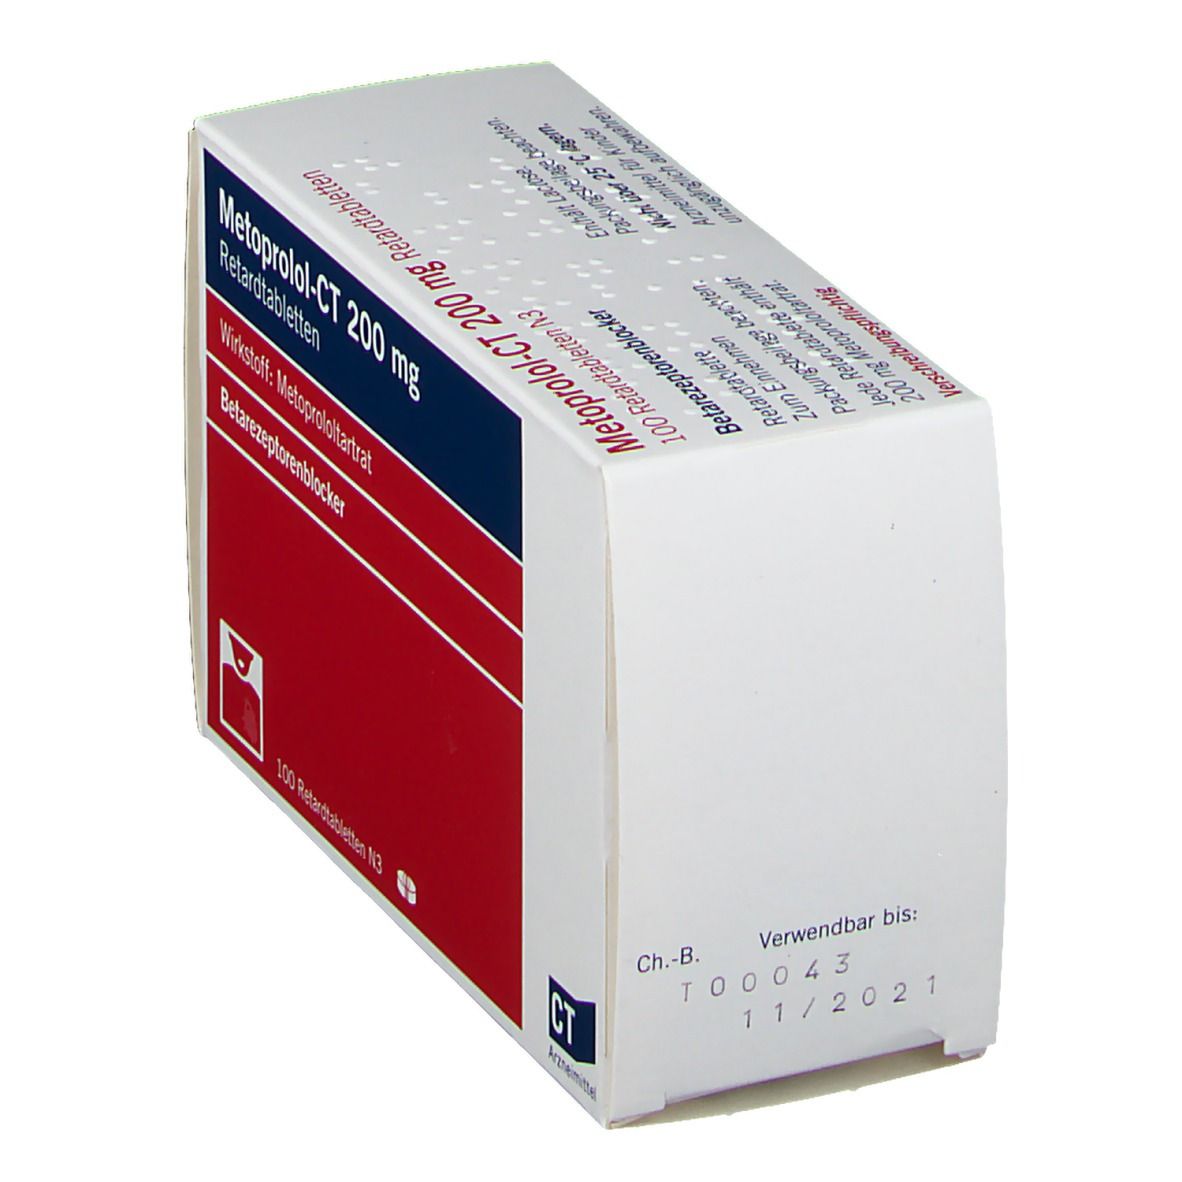 Metoprolol-CT 200 mg Retardtabletten